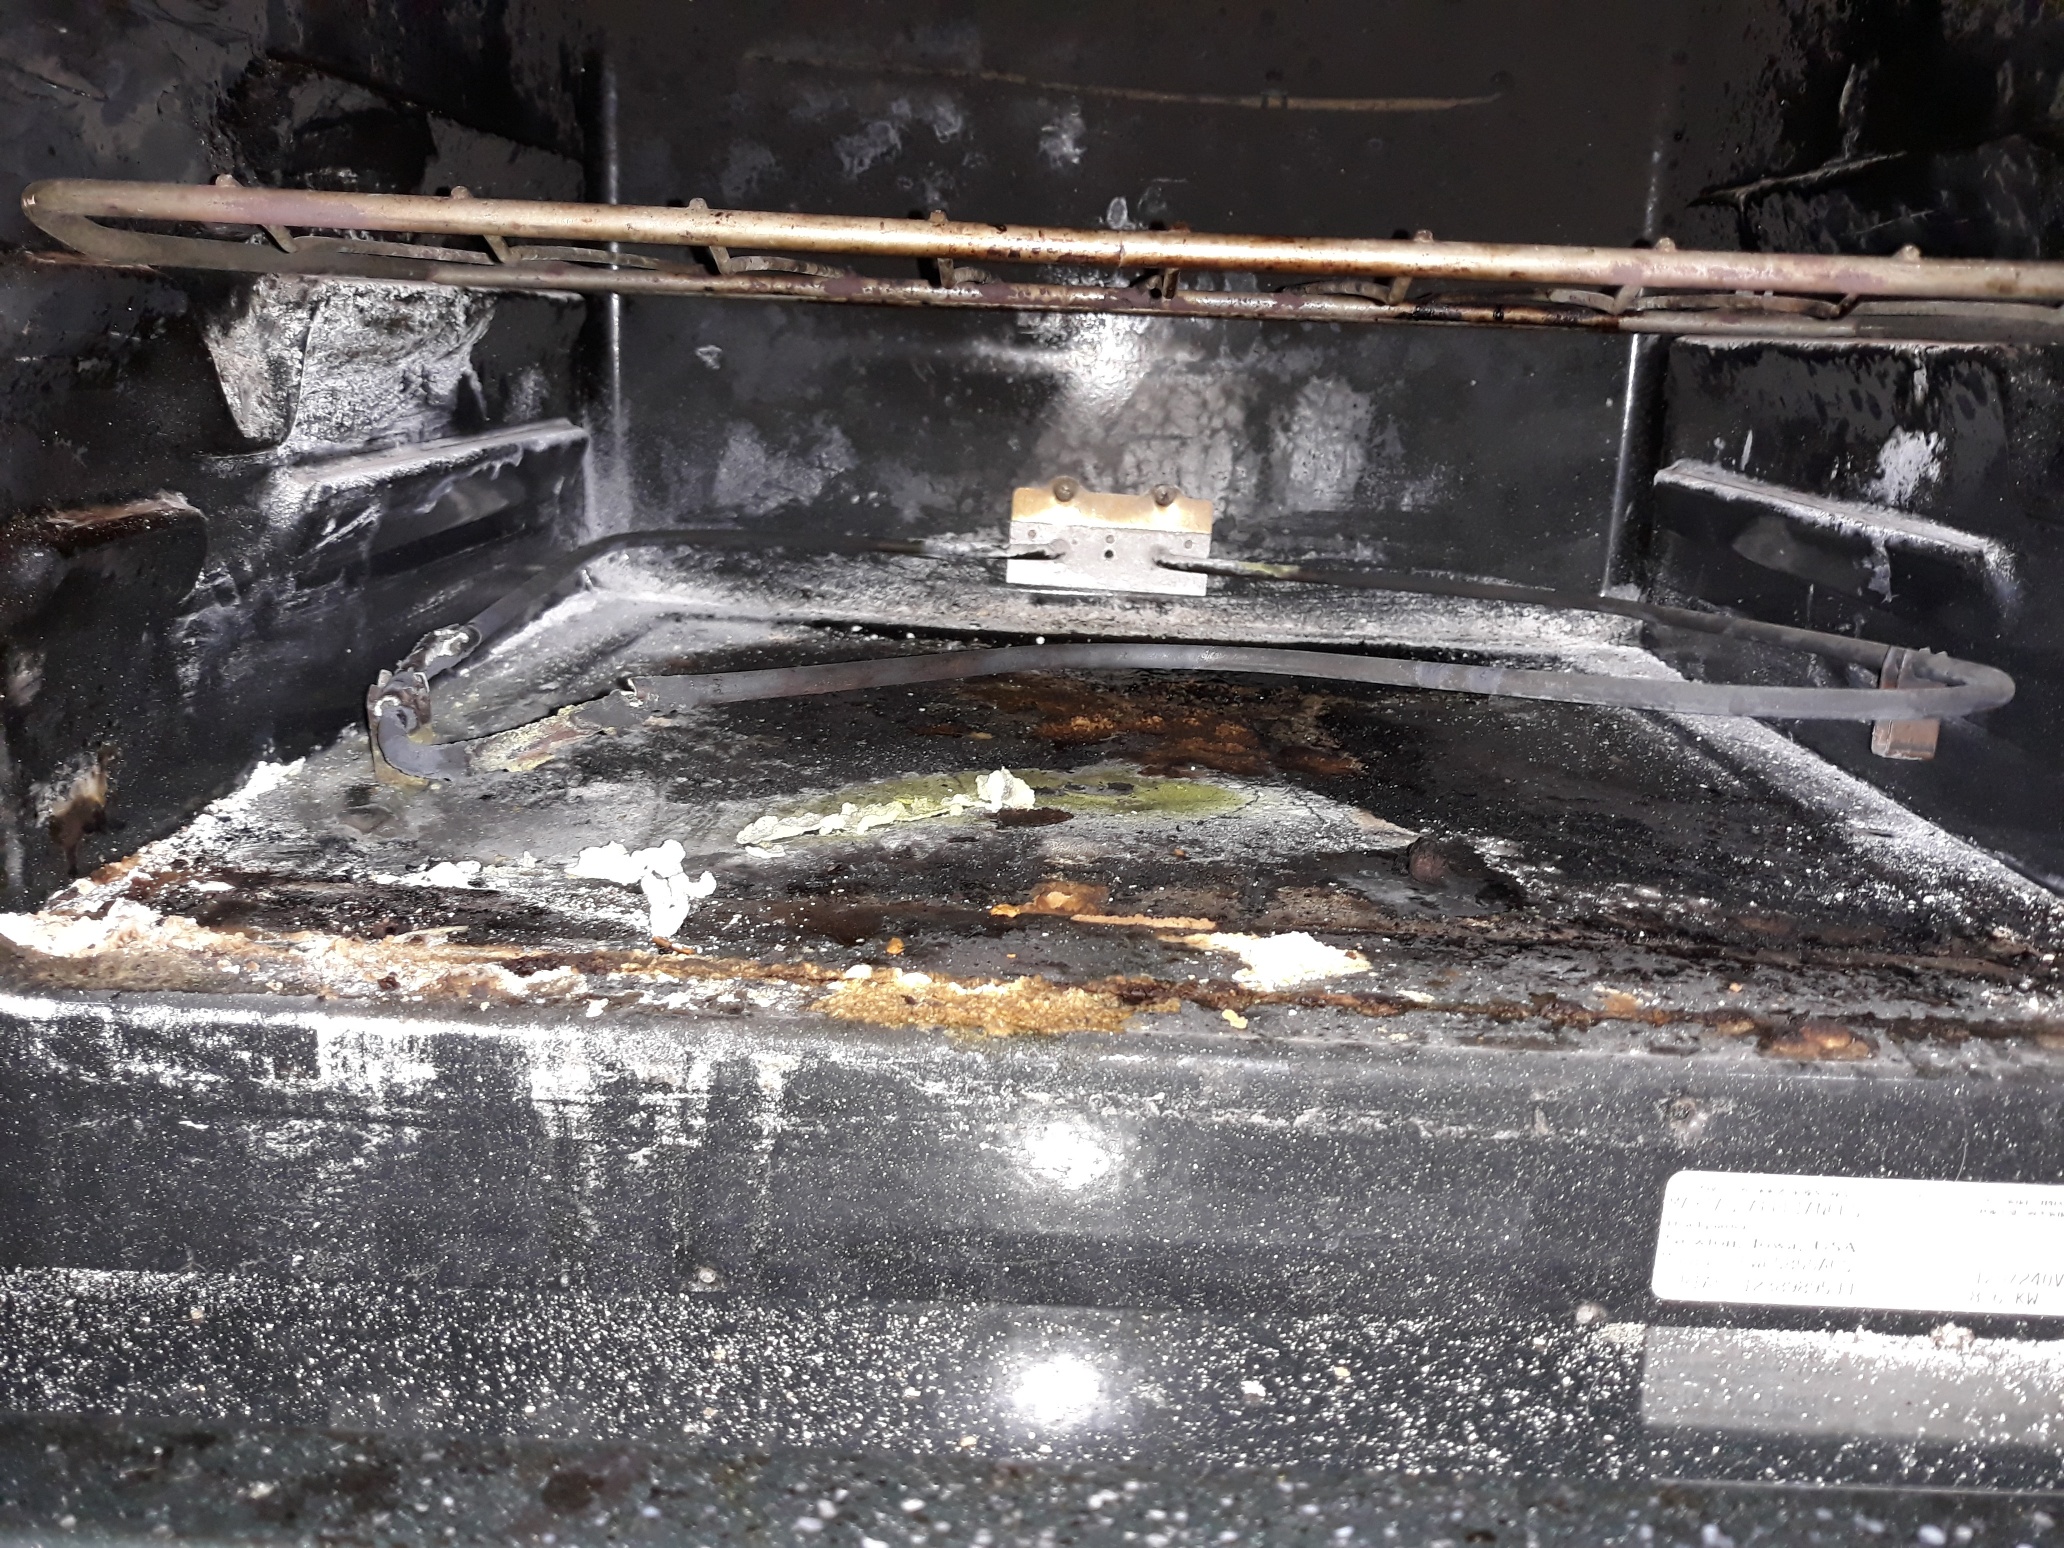 appliance repair oven repair repair require replacement of the broken bake element lee st wildwood fl 34785